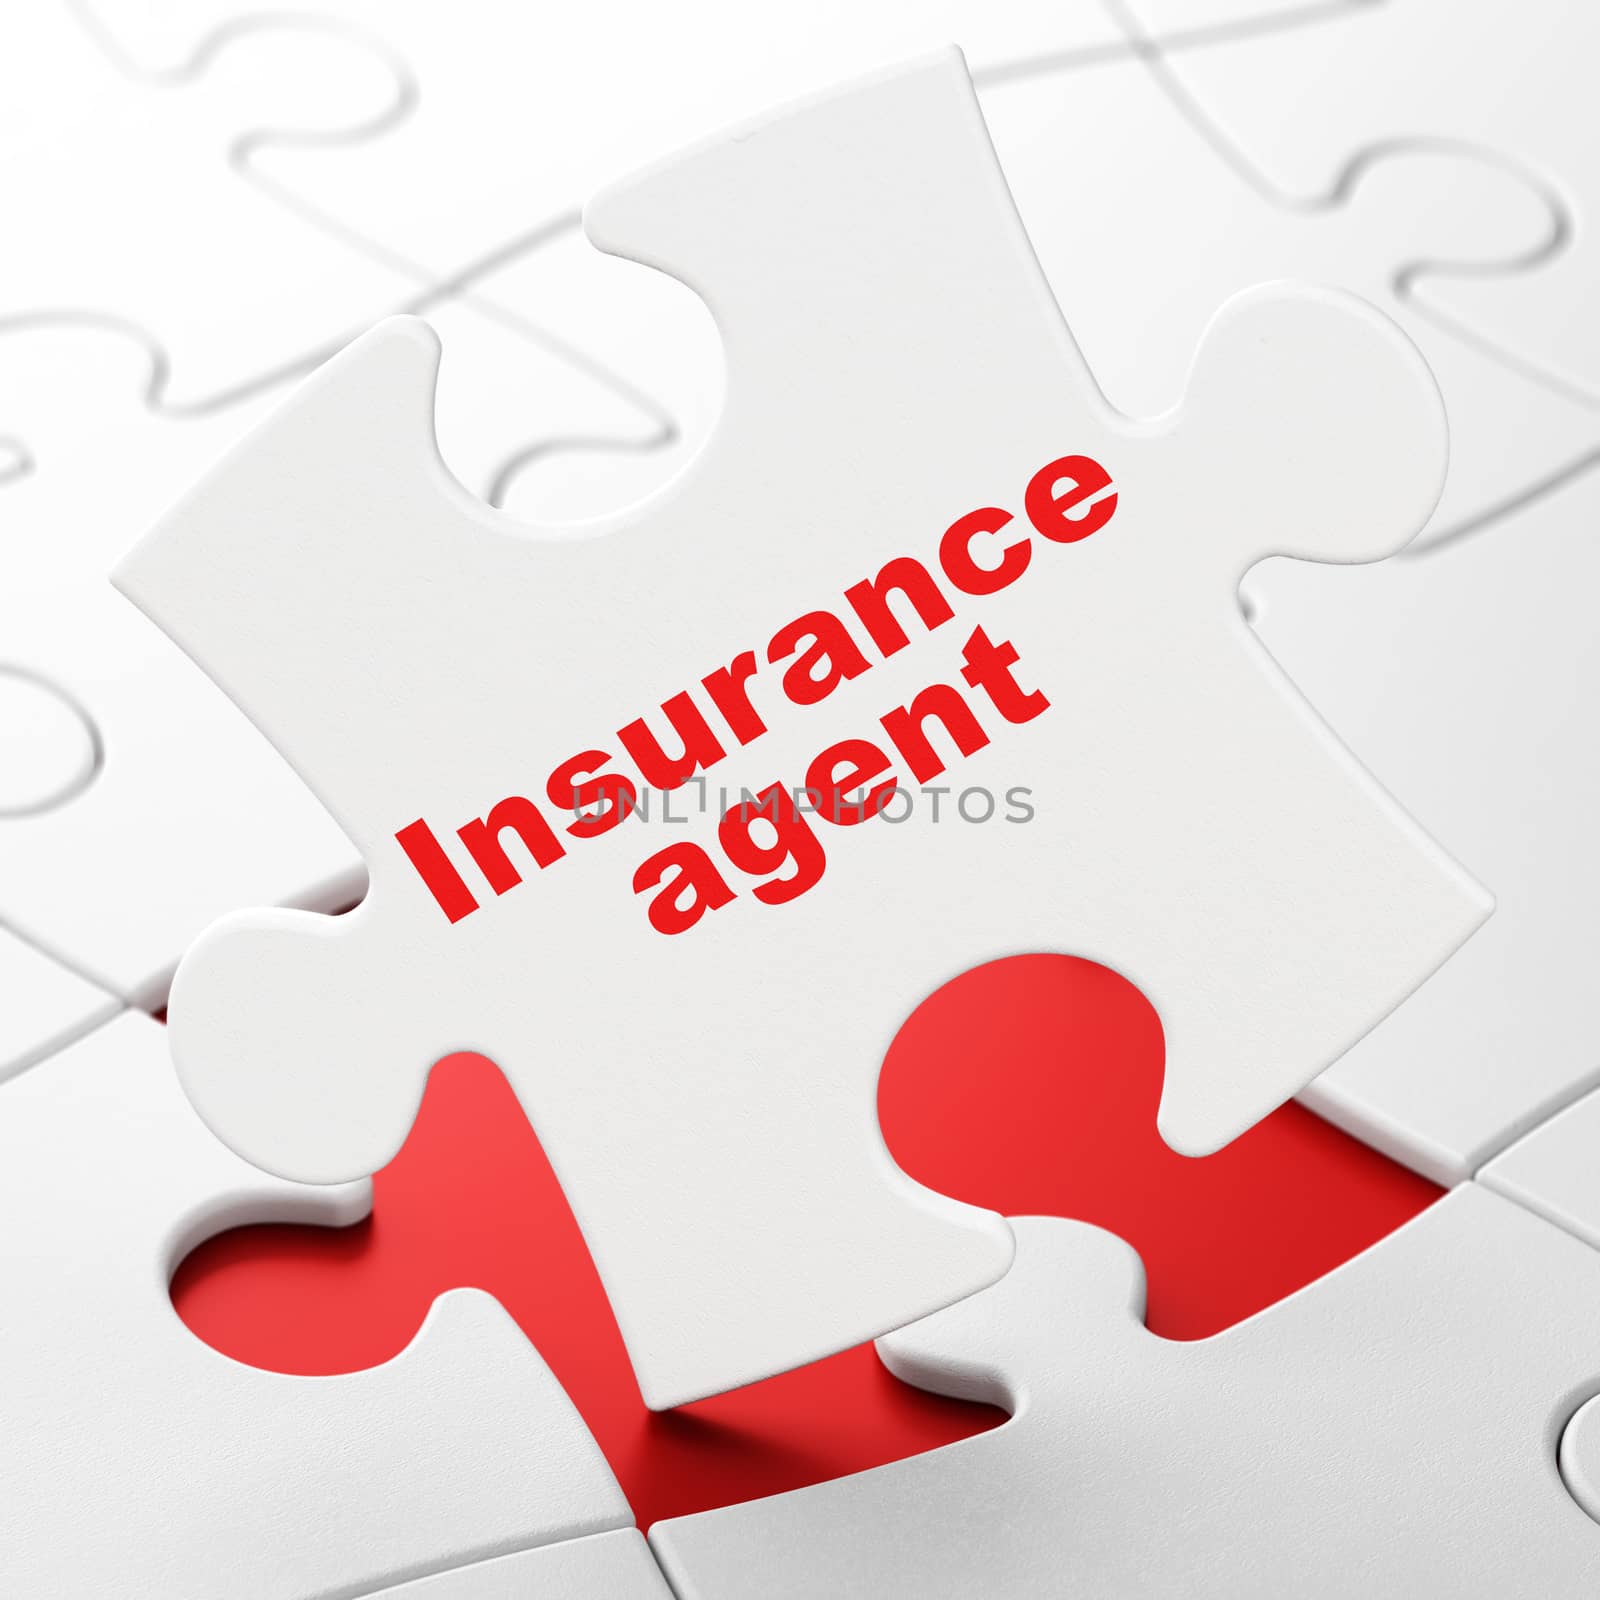 Insurance concept: Insurance Agent on White puzzle pieces background, 3d render